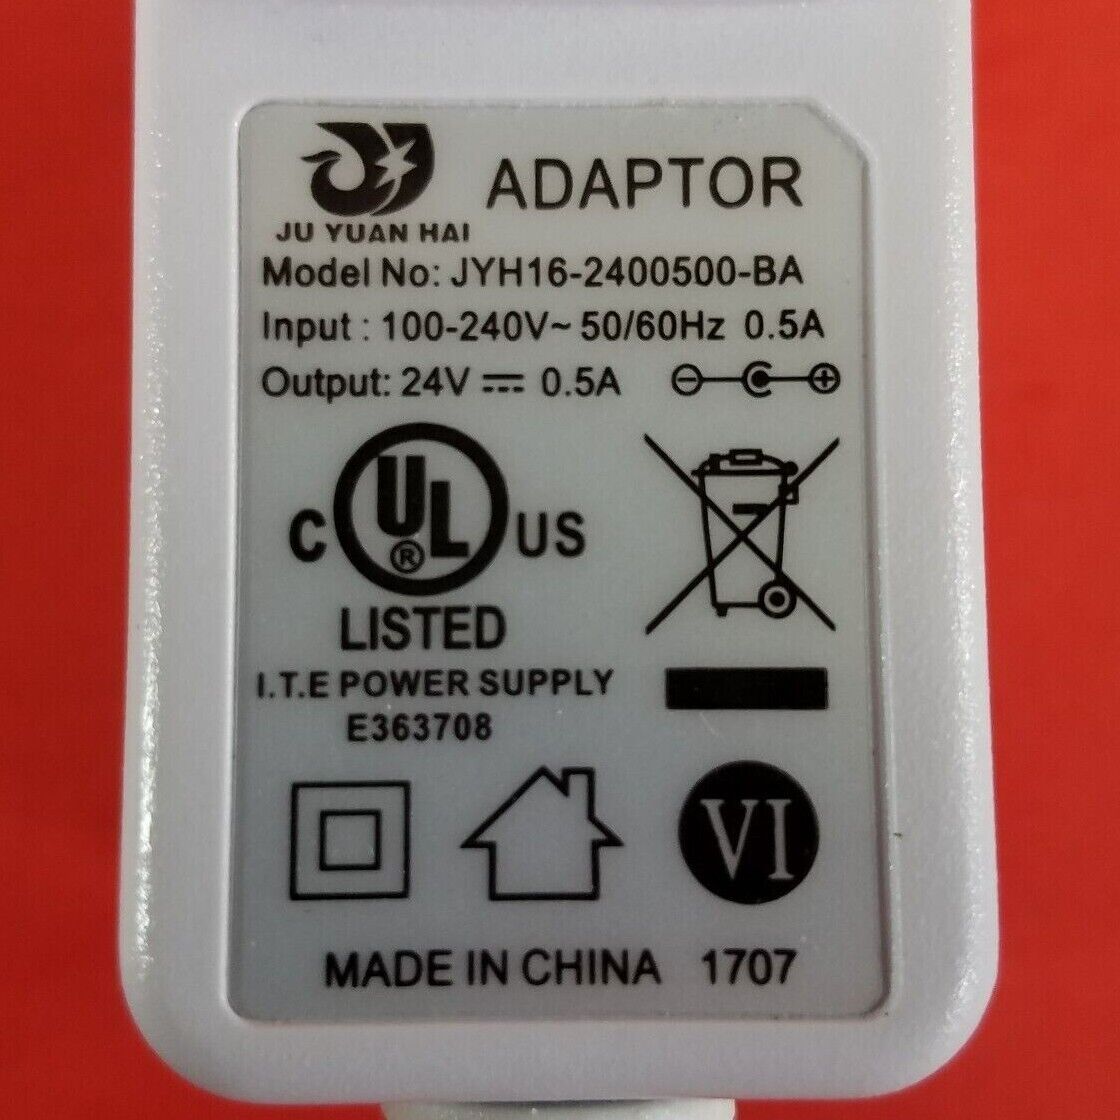 JU YUAN HAI JYH16-2400500-BA Power Supply Adaptor 24V - 0.5A OEM AC/DC Adapter Type: AC/DC Adapter Features: Powered